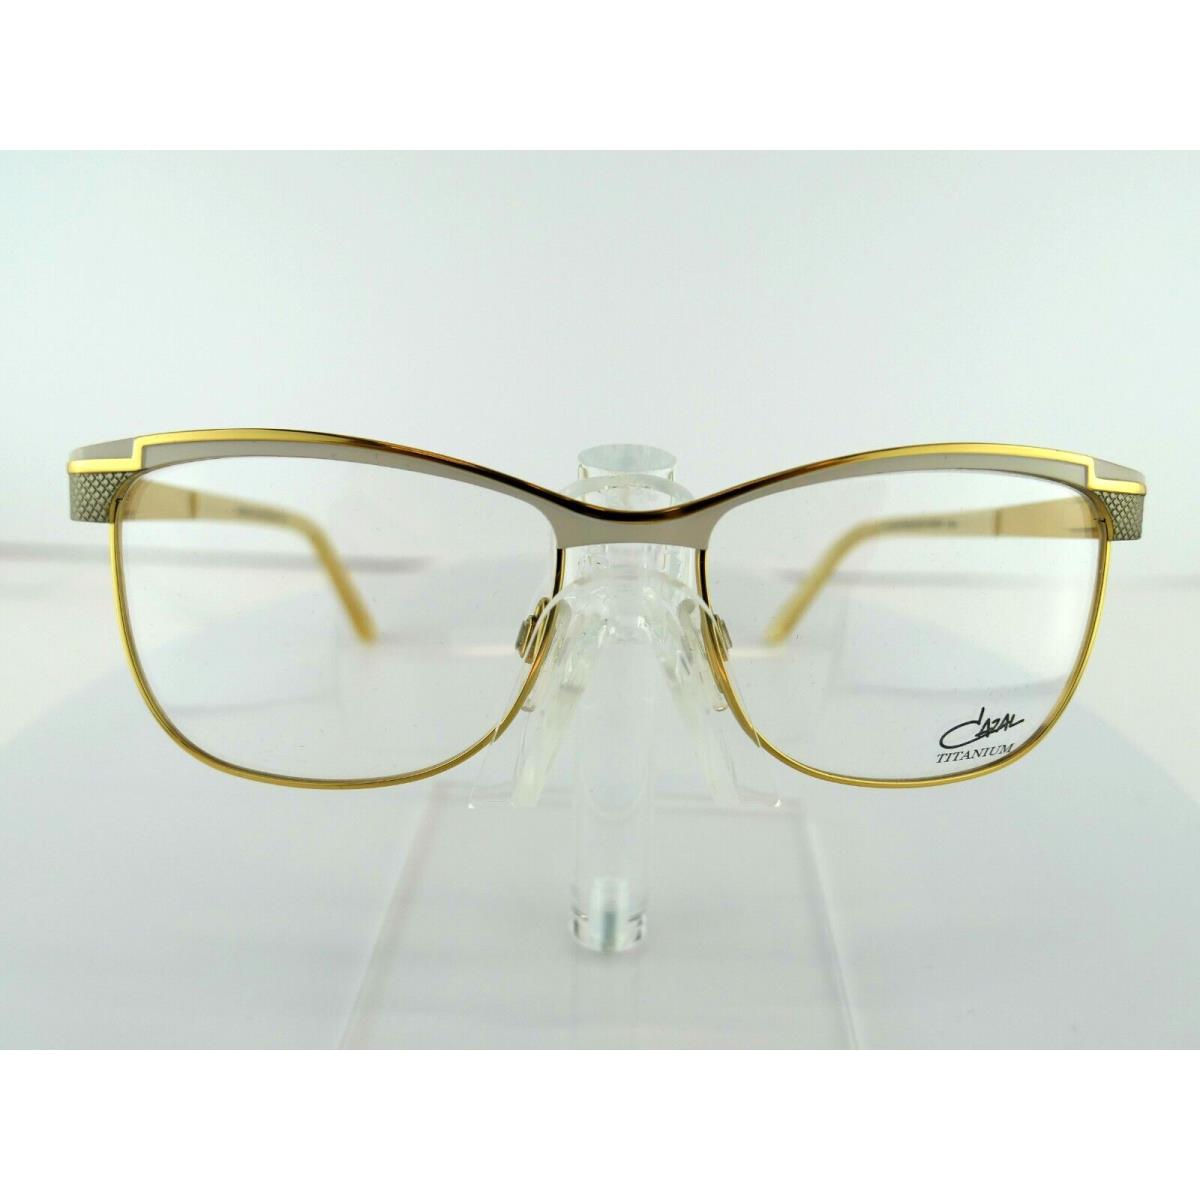 Cazal eyeglasses  - Frame: 0